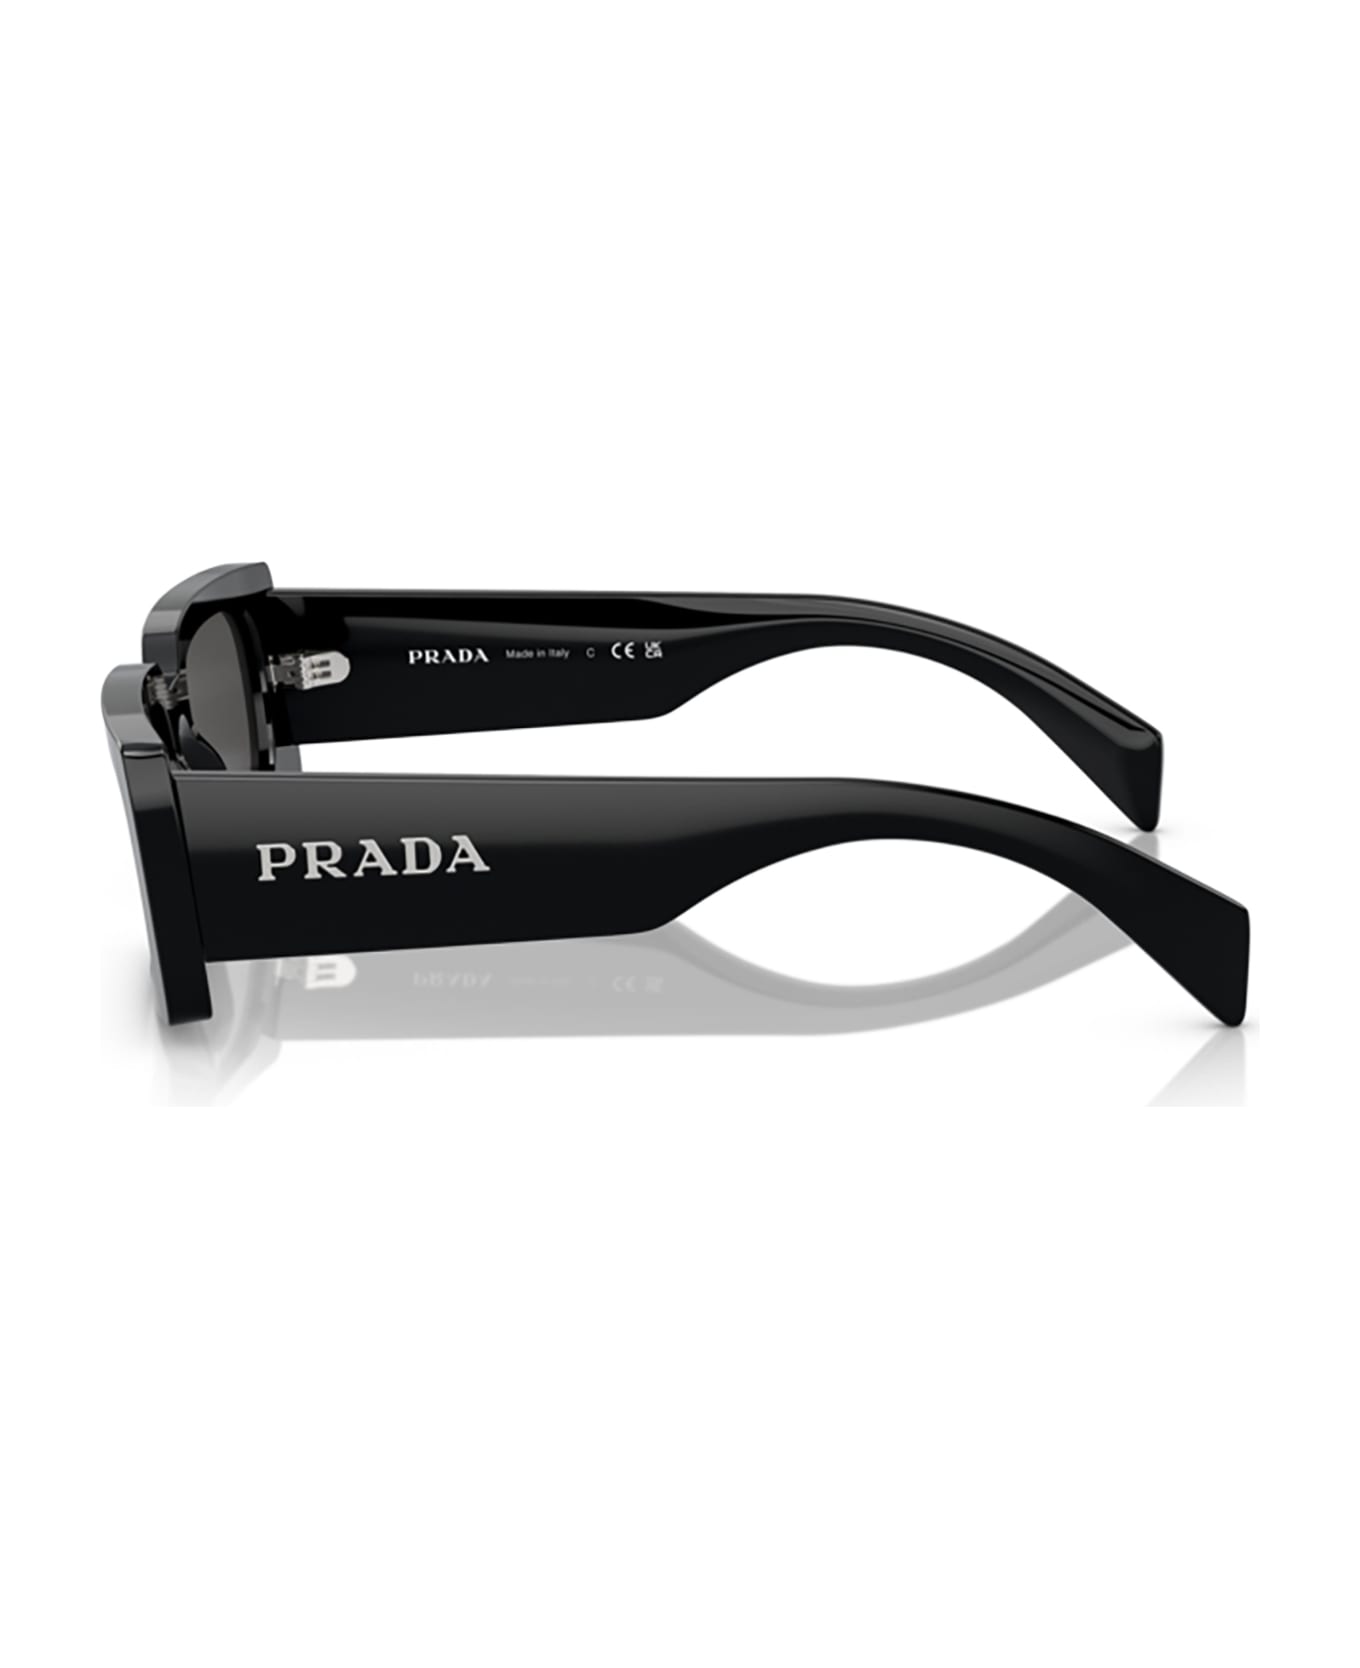 Prada Eyewear Pr A07s Black Sunglasses - Black